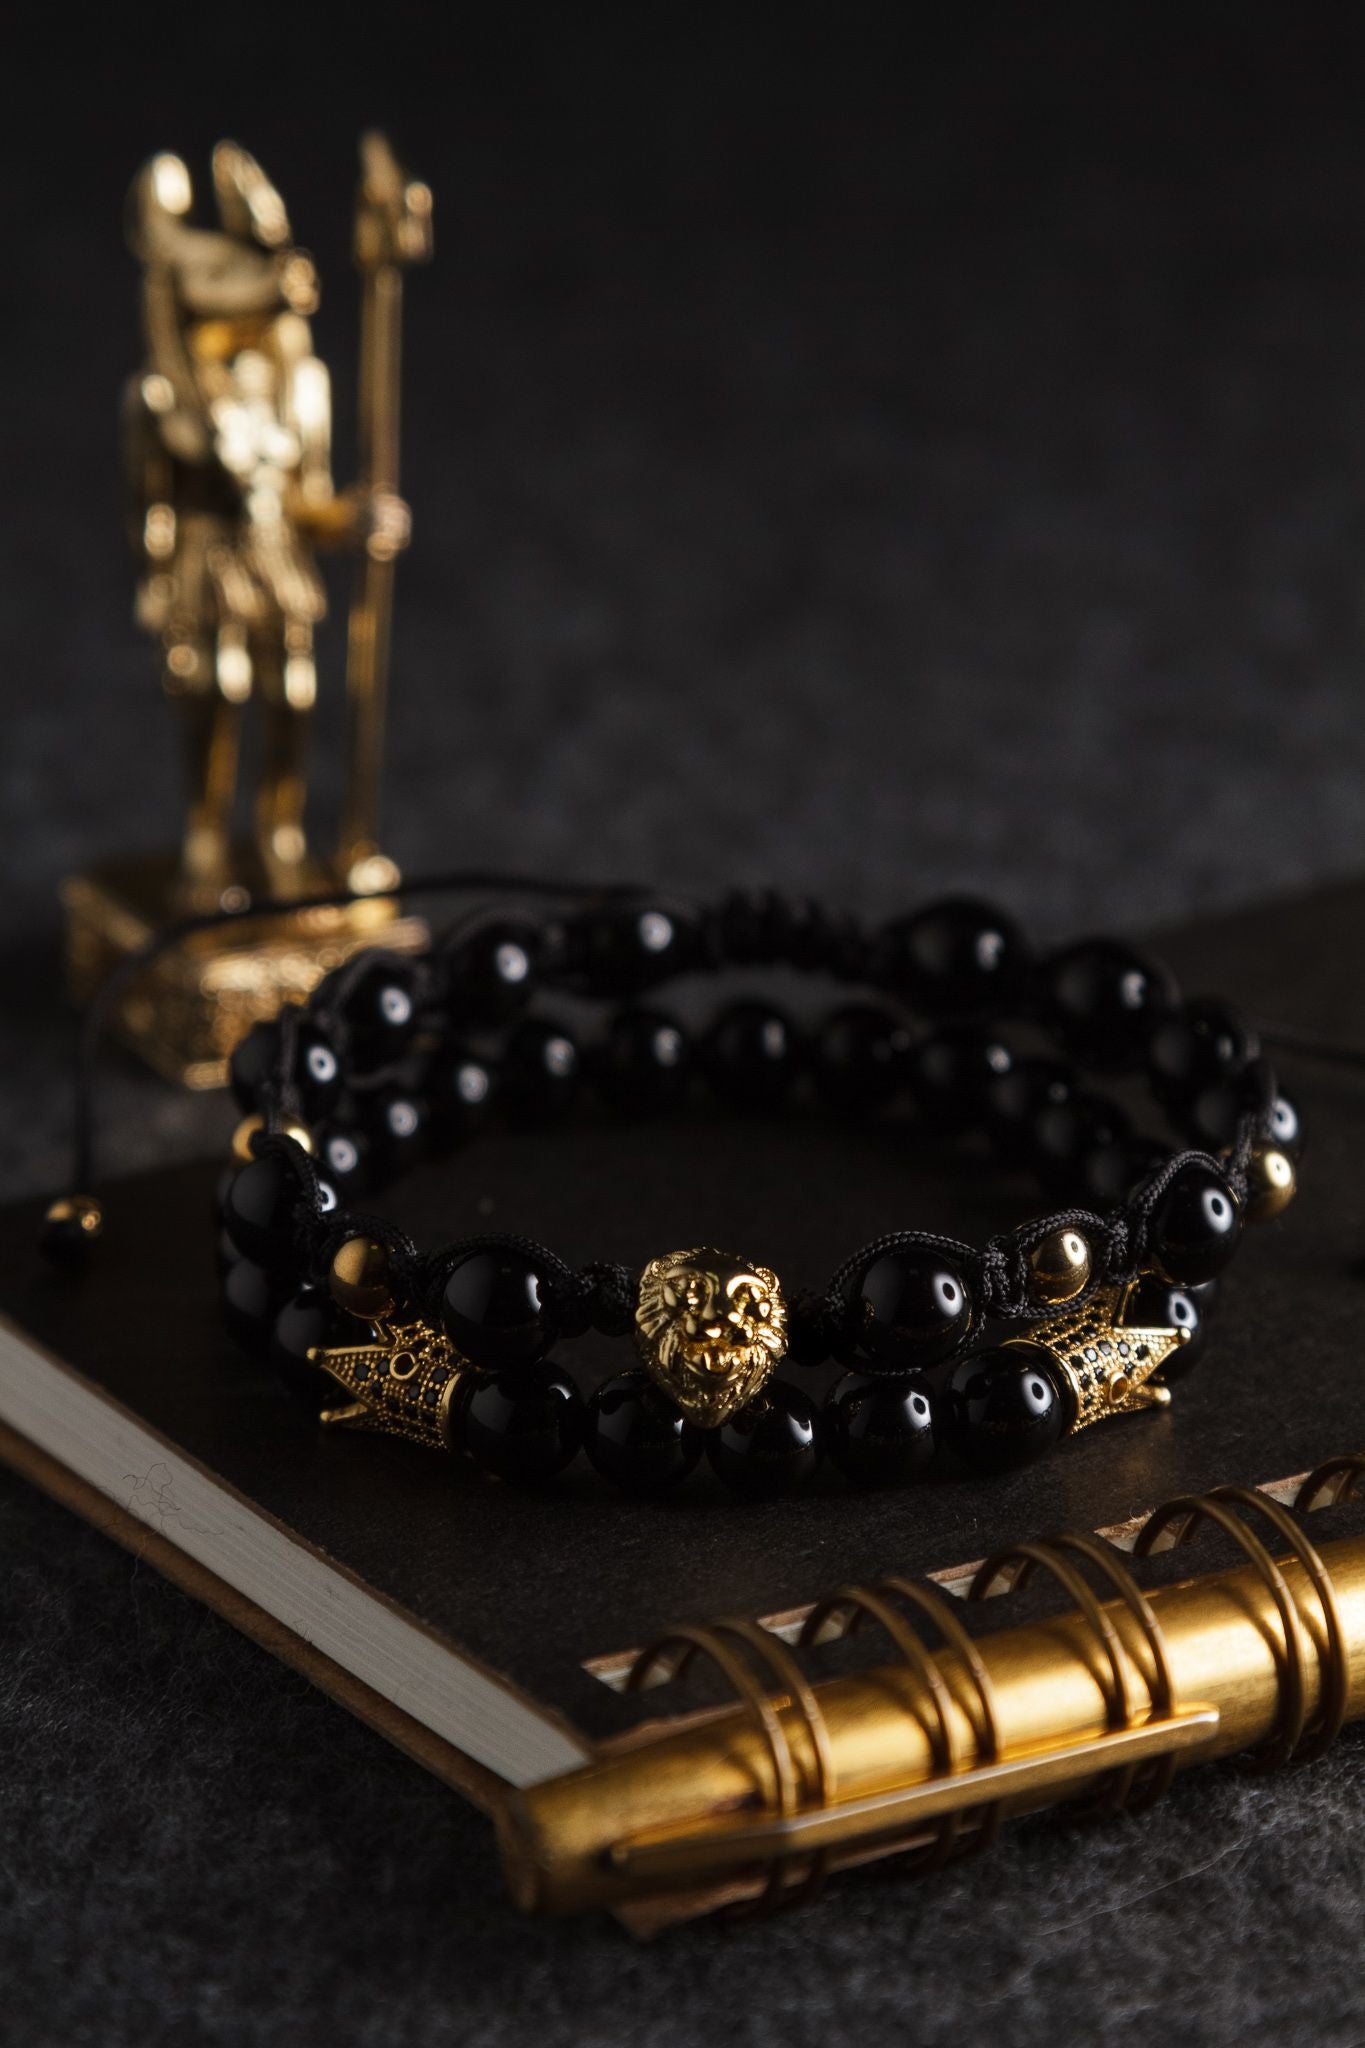 UNCOMMON Men's Beads Bracelet One Gold Lion Charm Black Onyx Beads